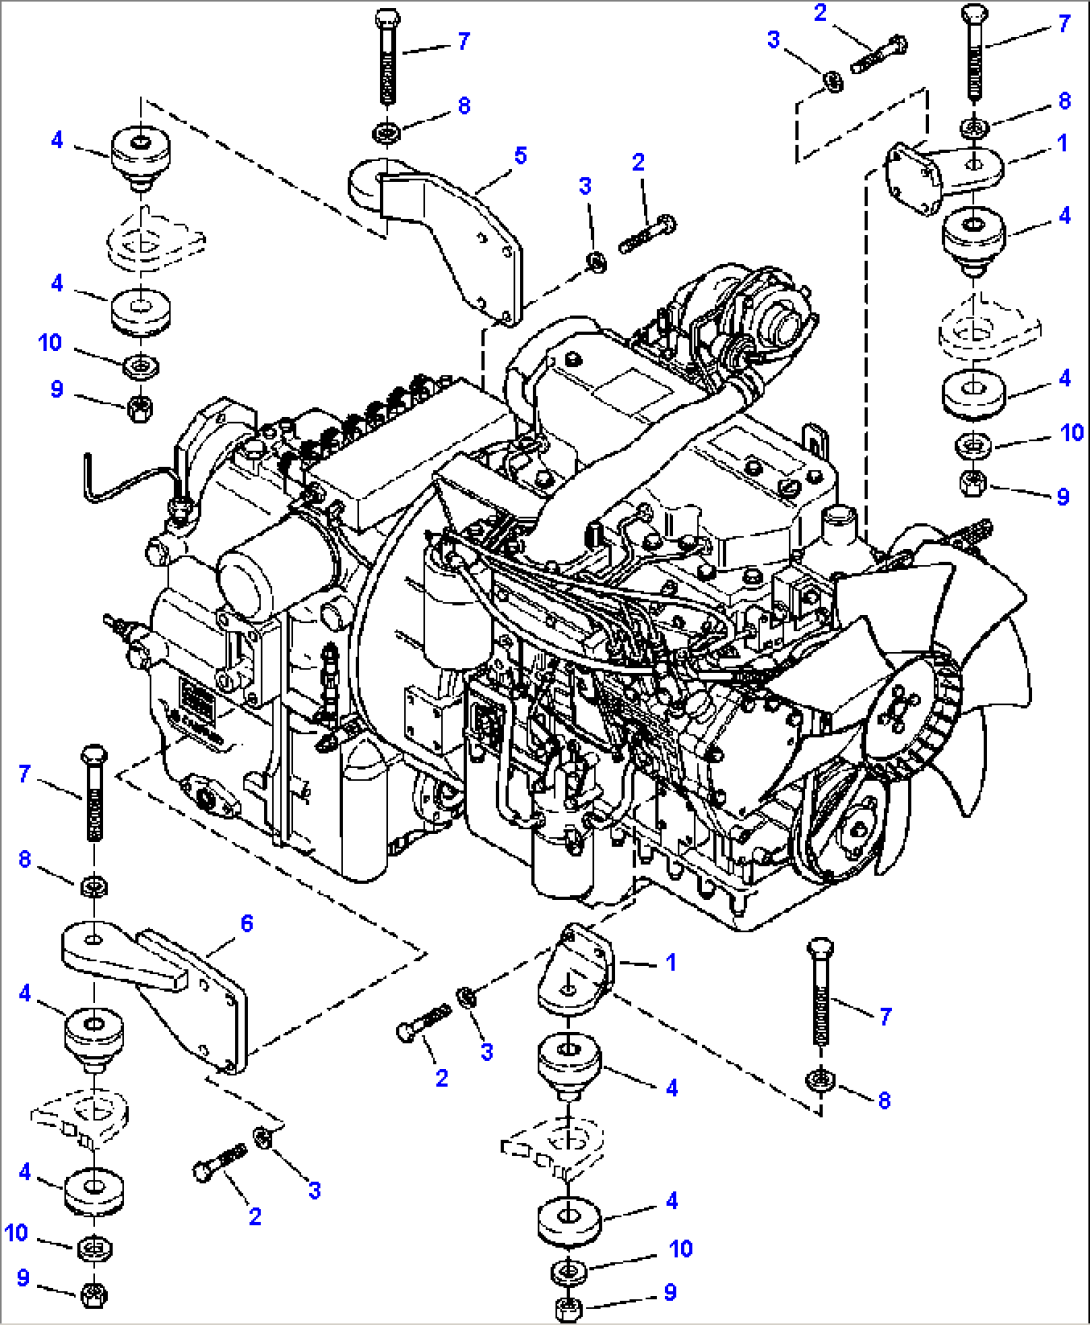 FIG. B1000-01A1 TIER II ENGINE MOUNTING